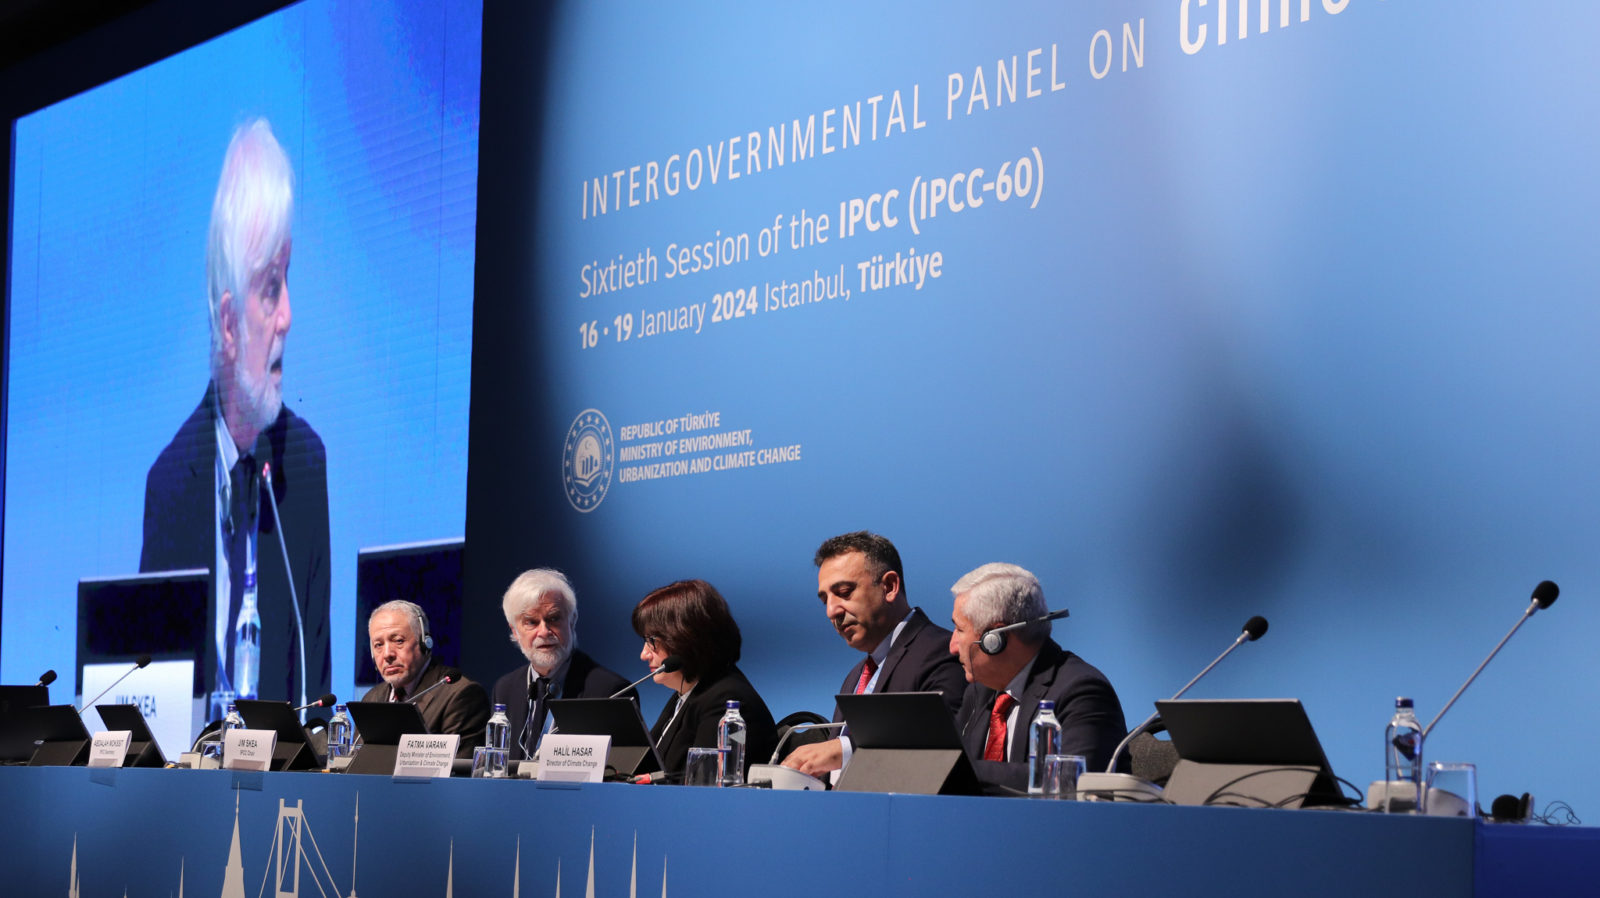 Image of IPCC panel